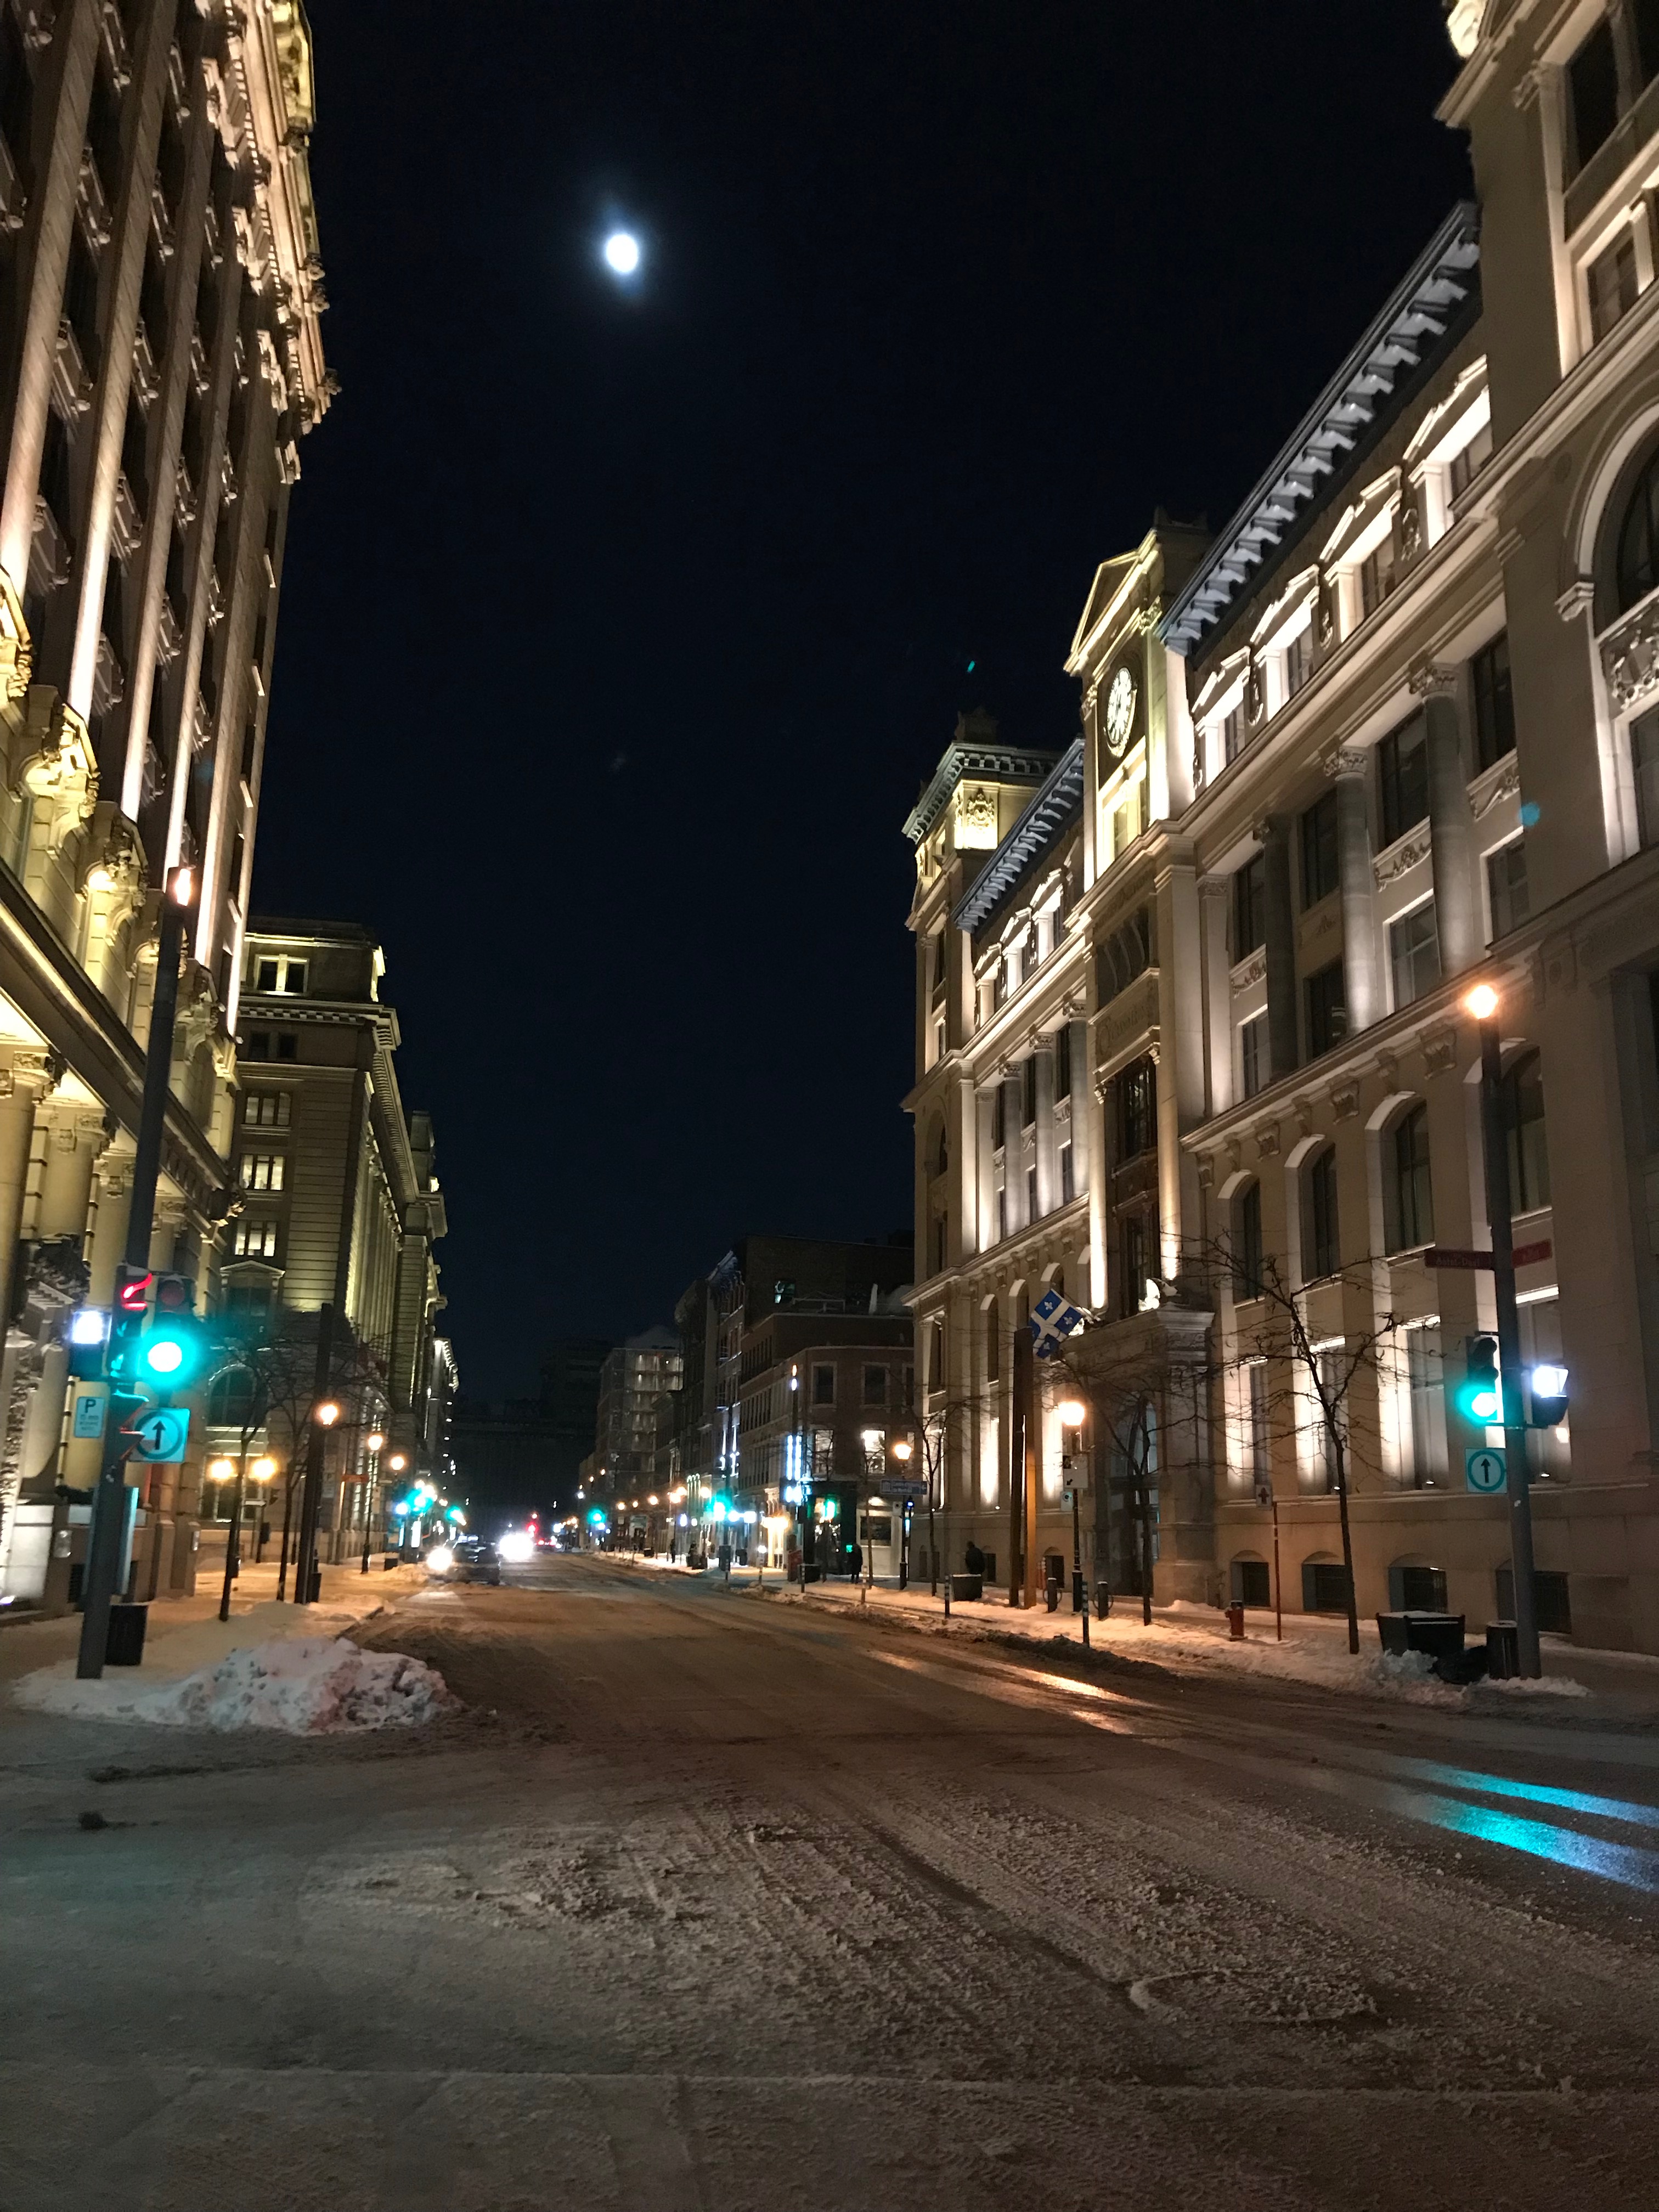 A shot of an empty, snowy street